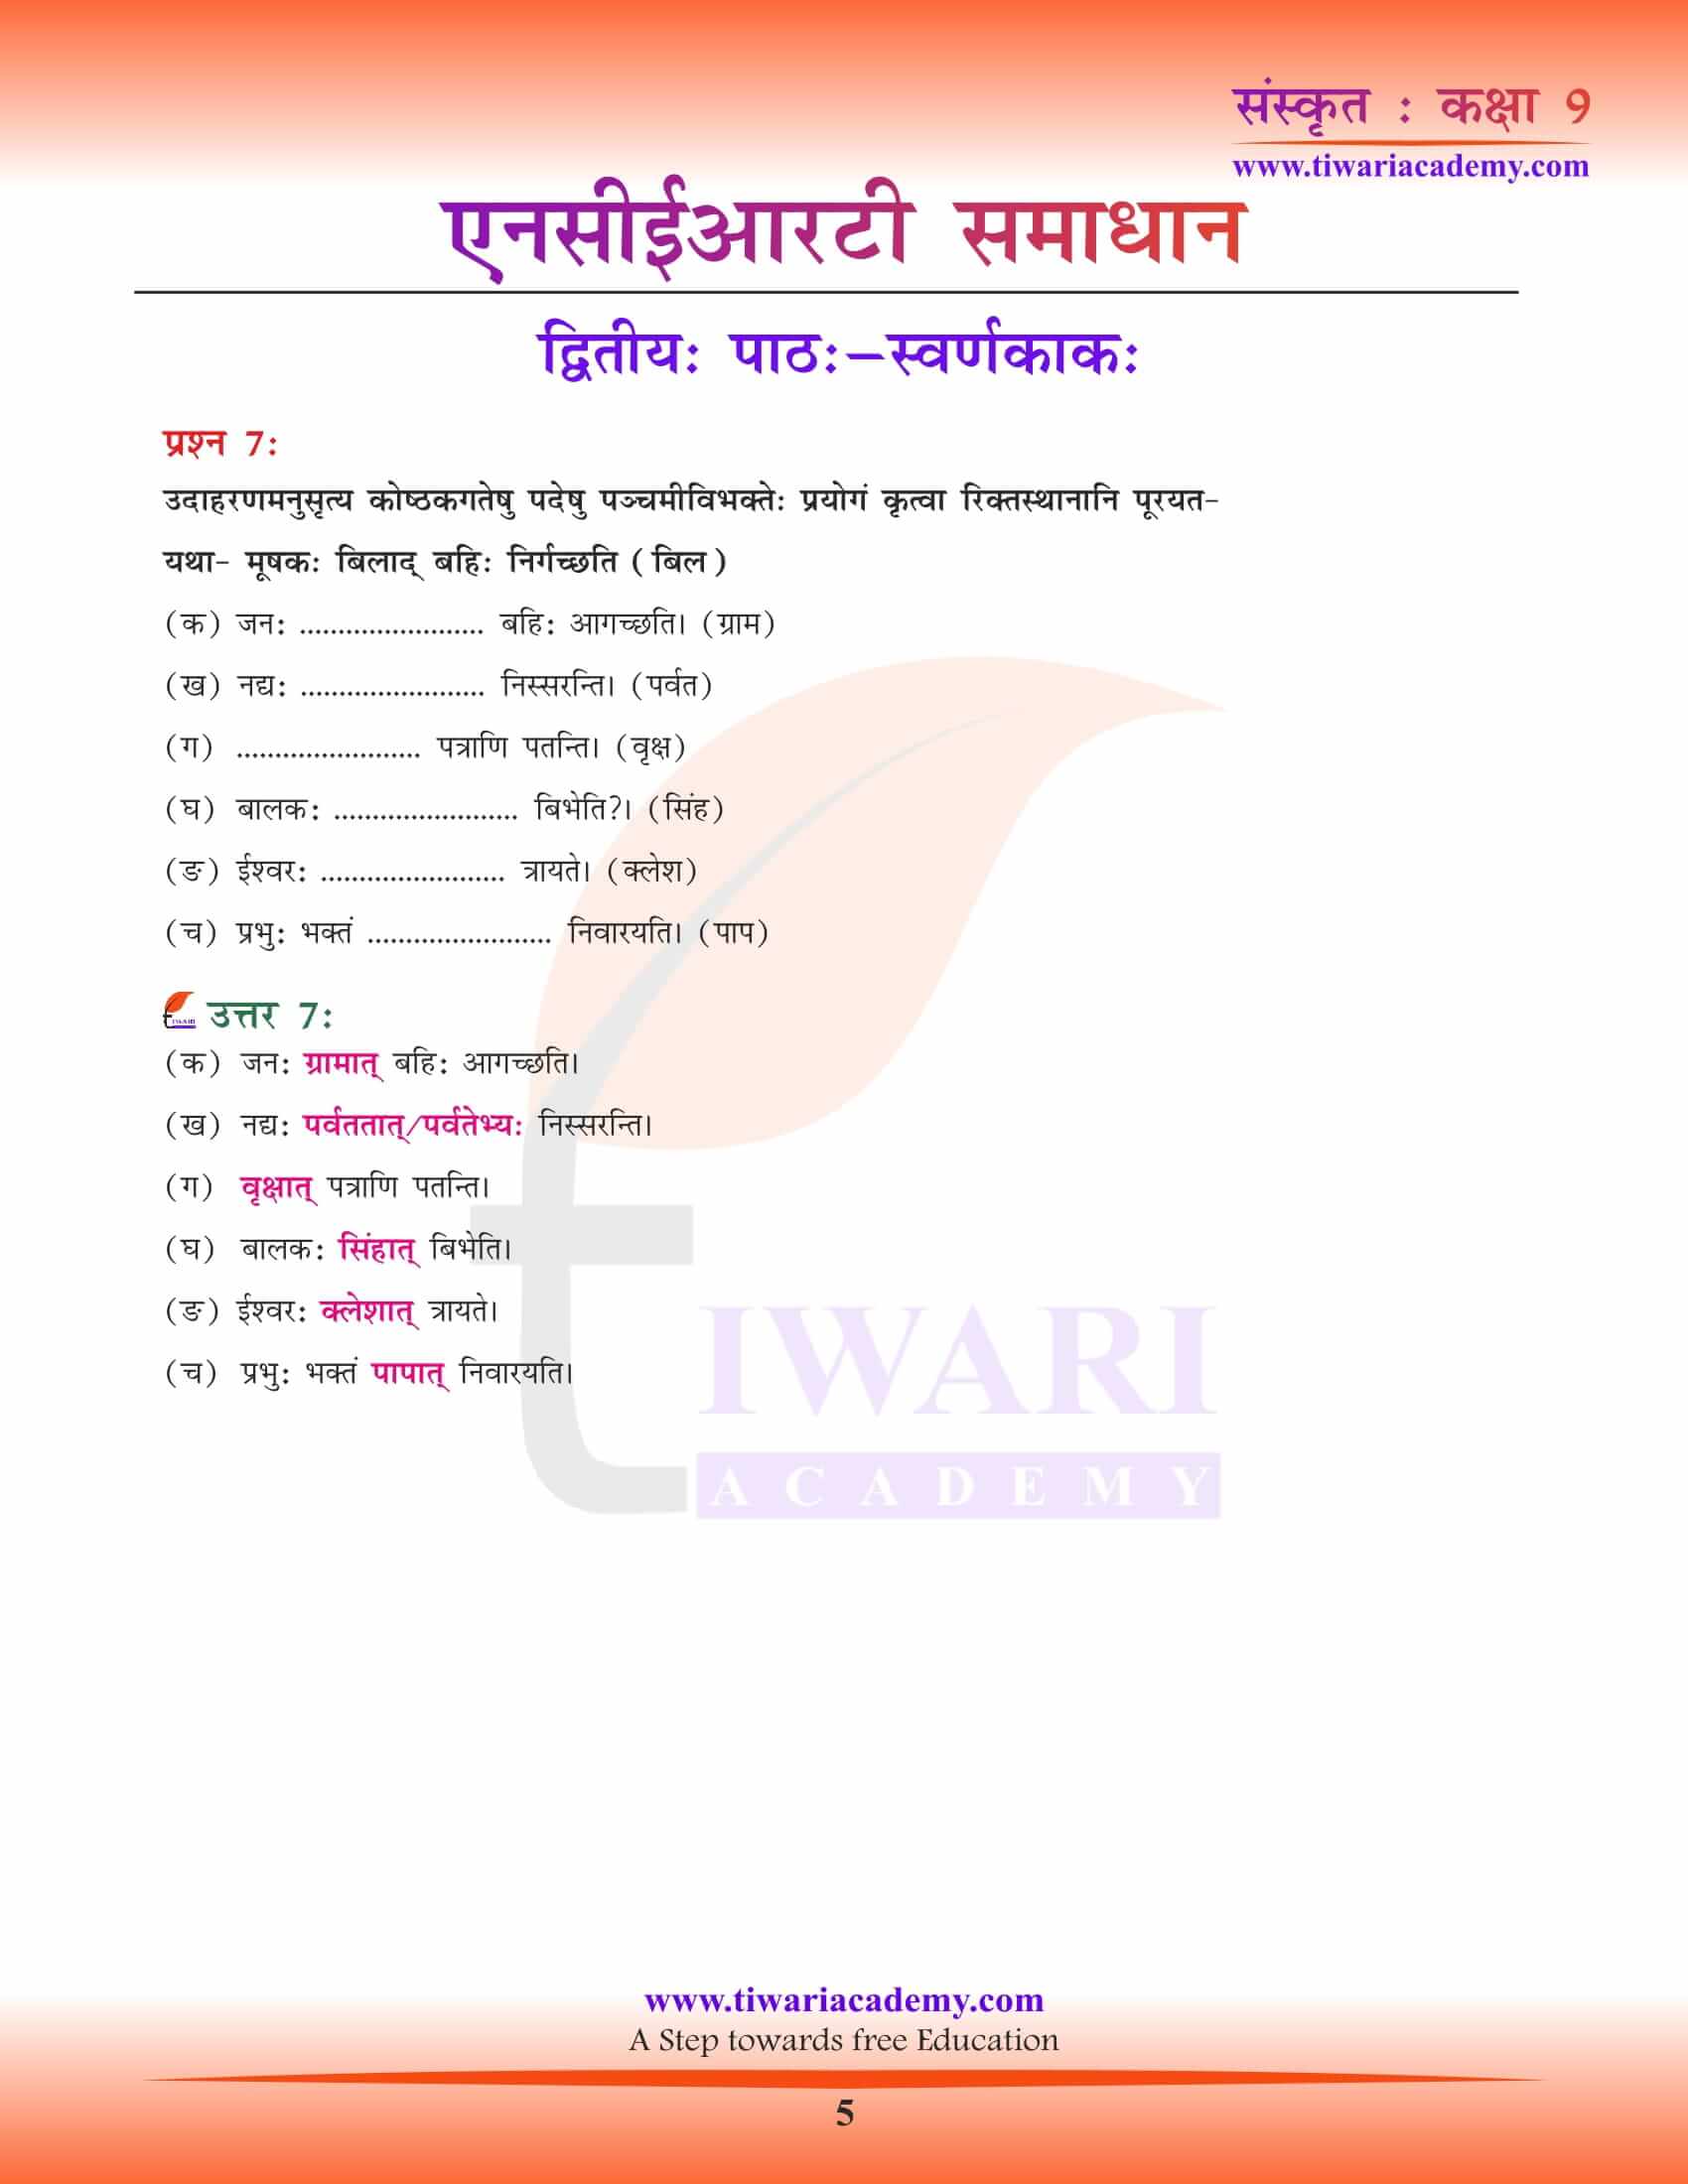 NCERT Solutions for Class 9 Sanskrit Chapter 2 free download